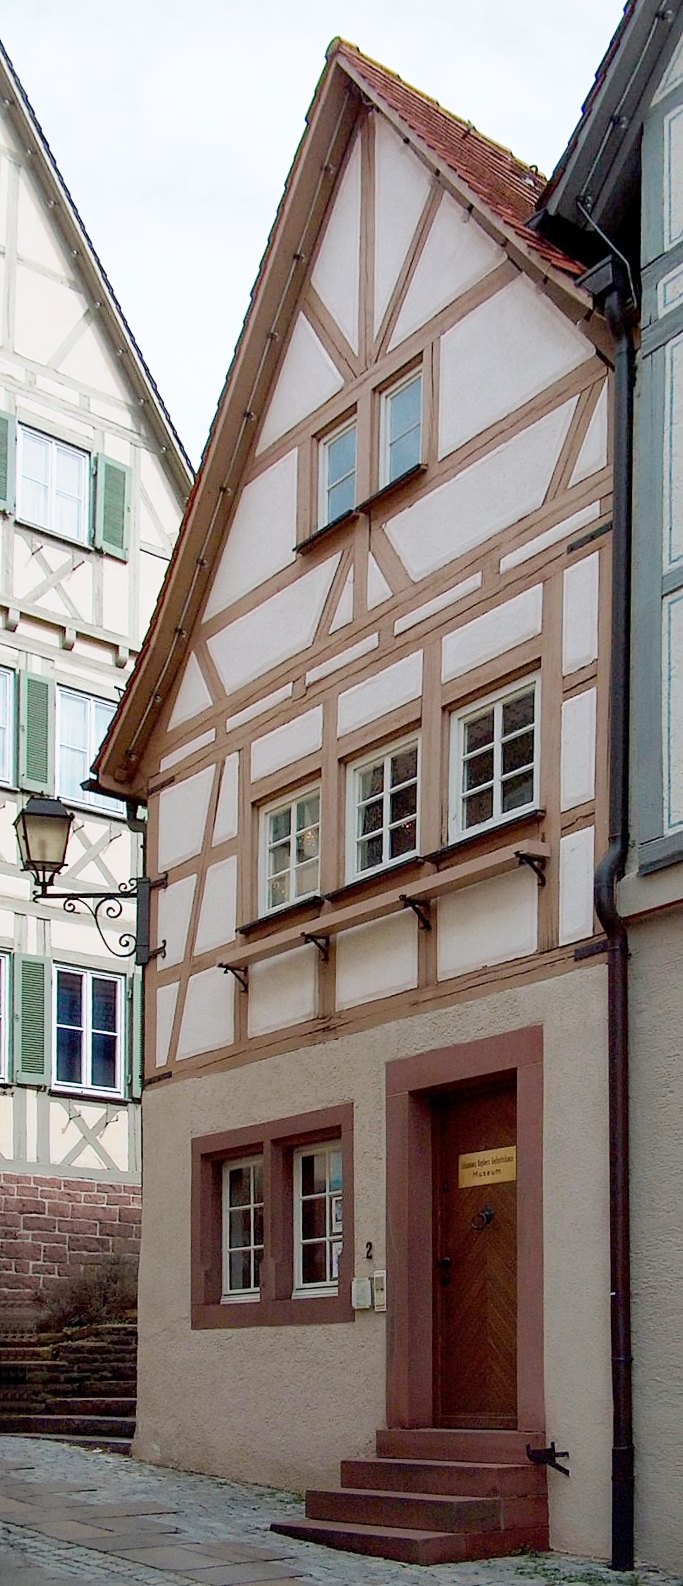 Johannes Kepler's birthplace in Weil der Stadt. Photo taken on January 14, 2010.